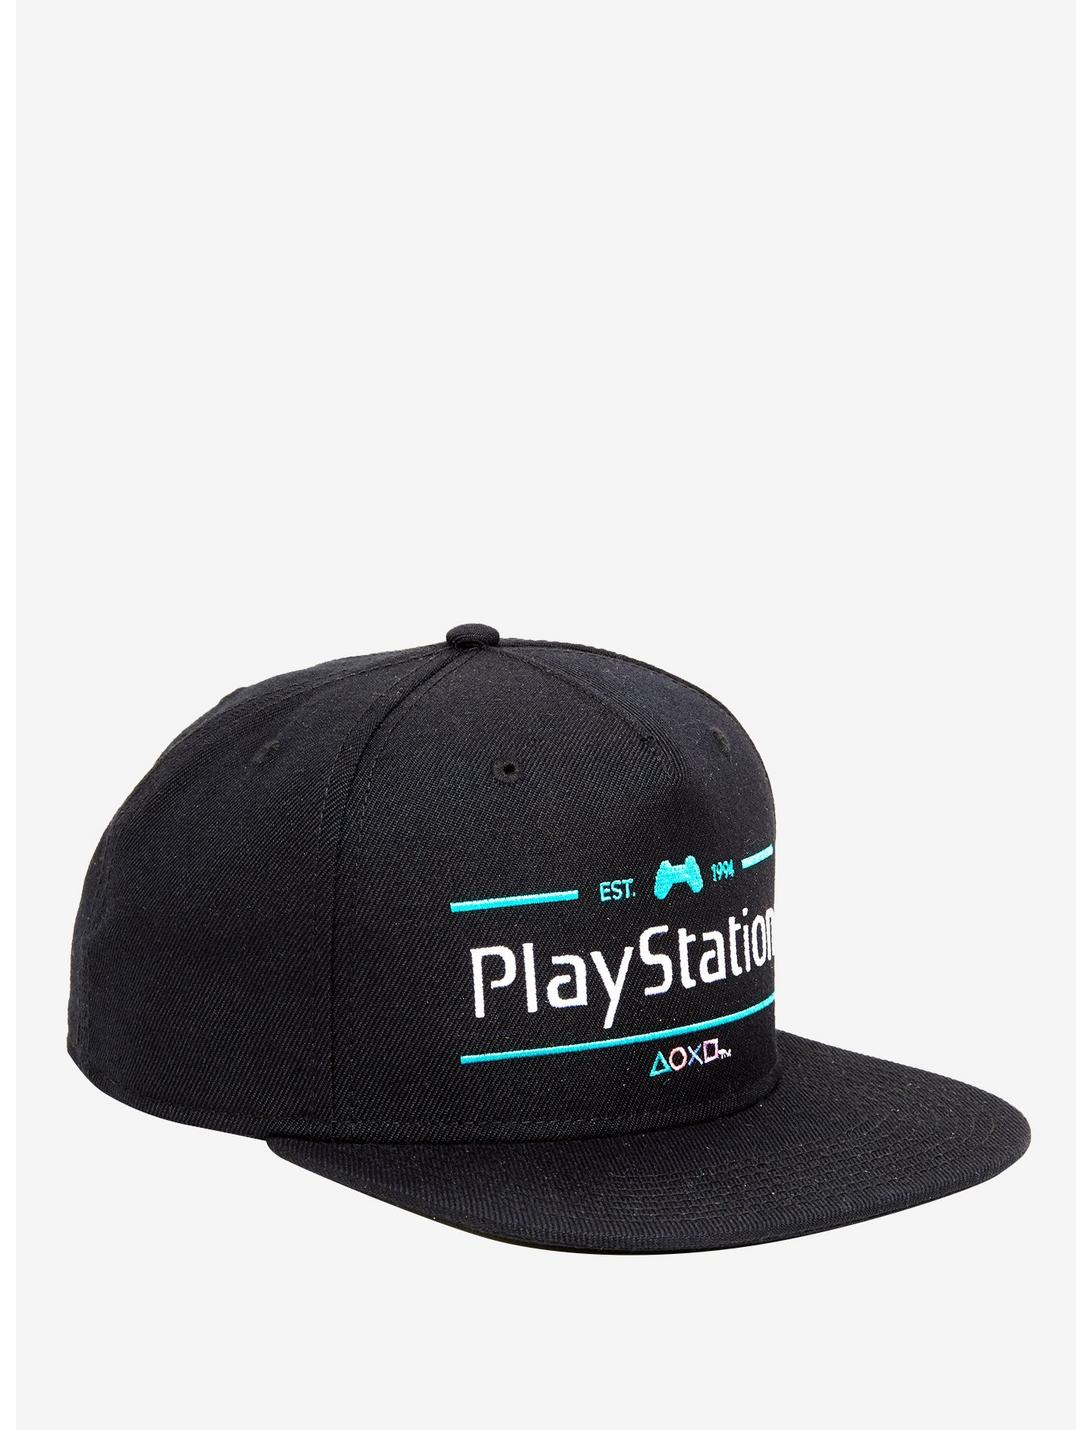 PlayStation Est. 1994 Snapback Hat, , hi-res